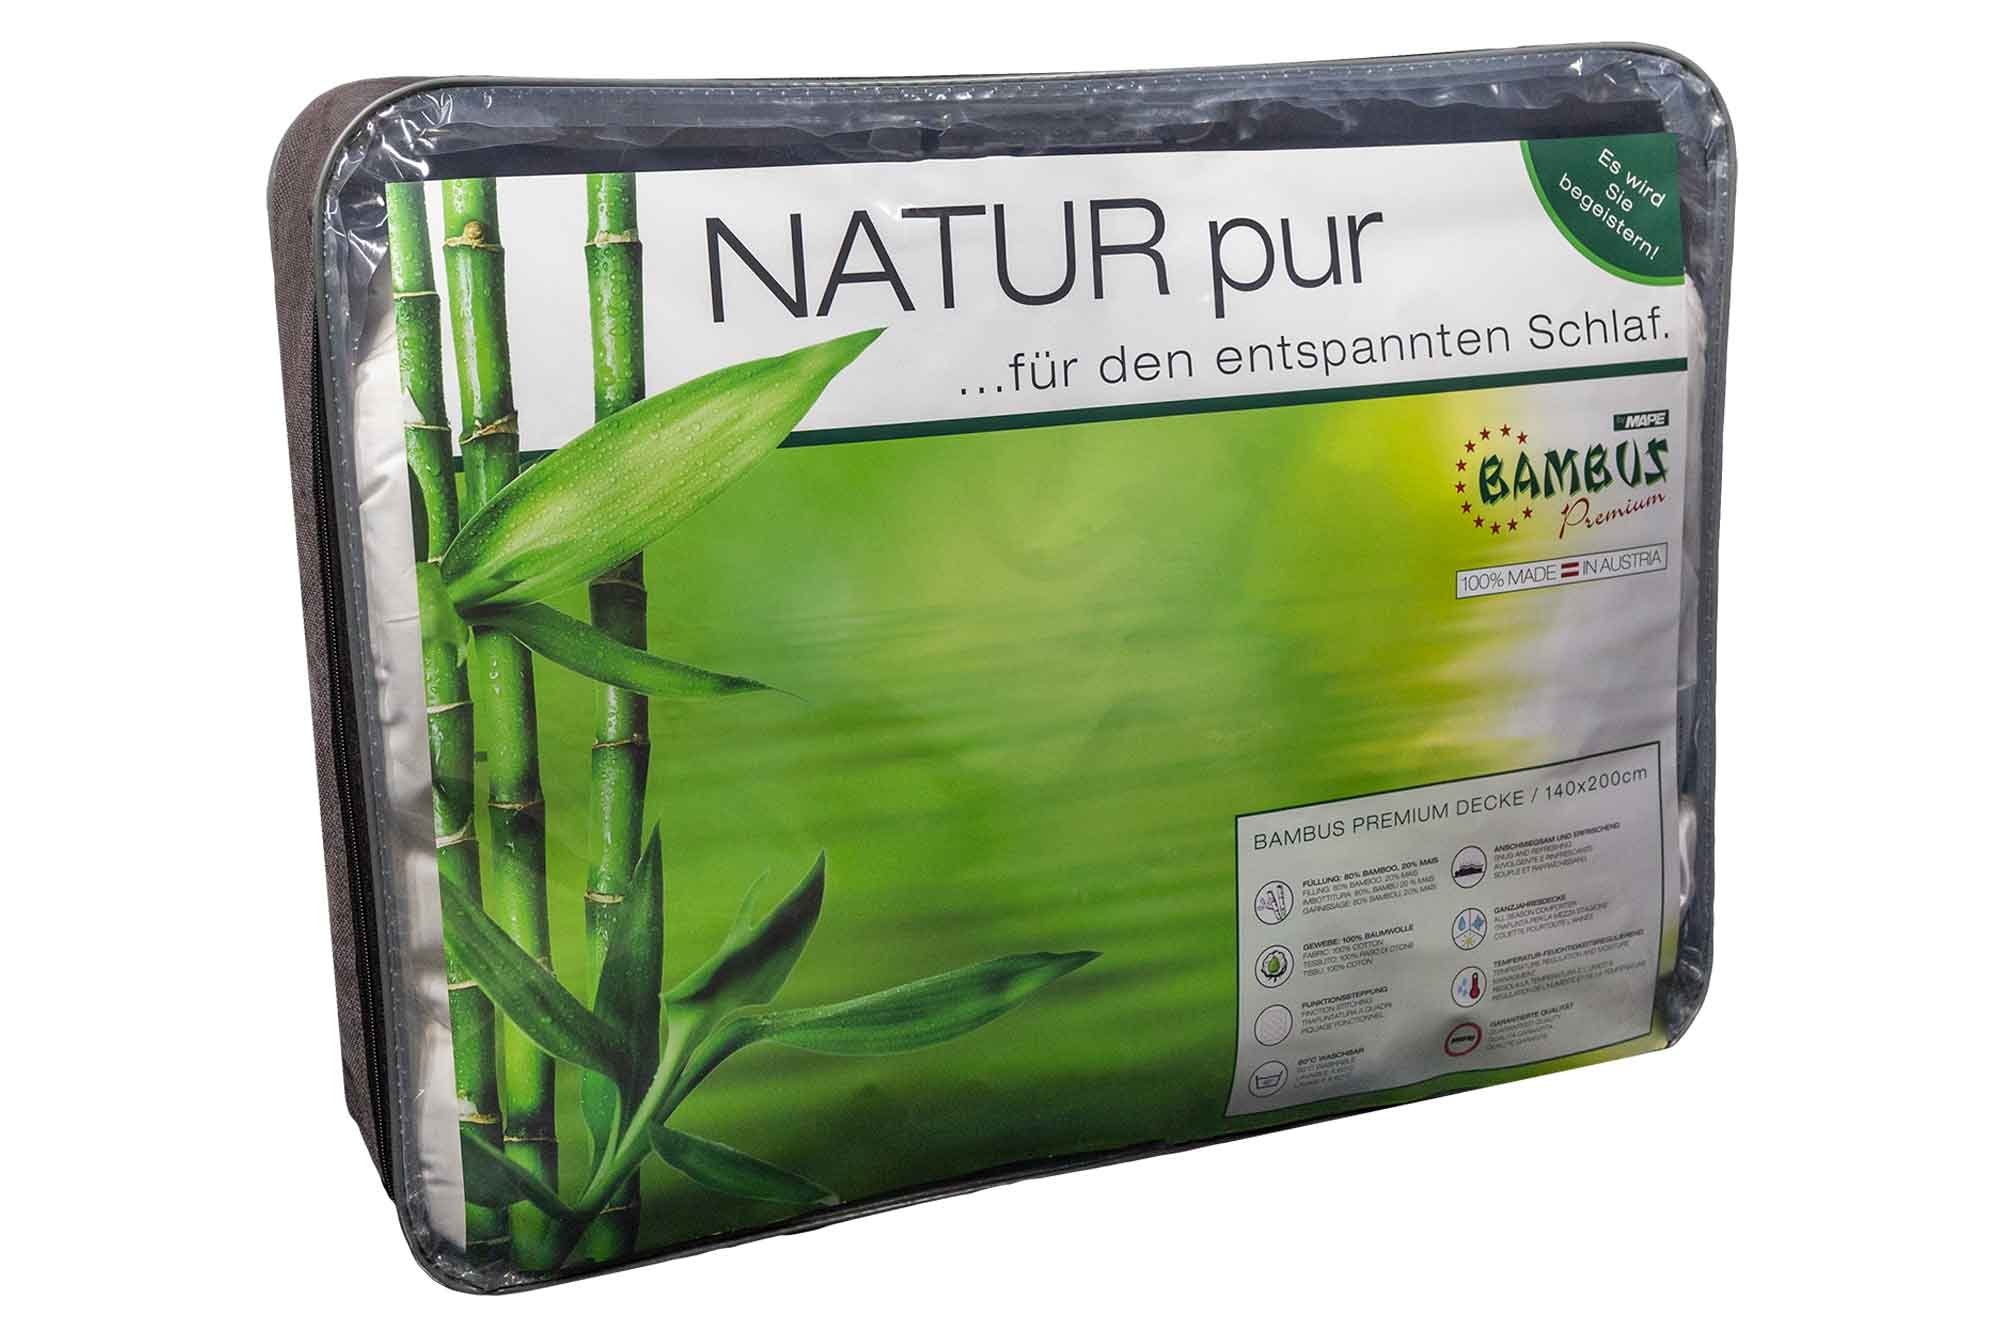 Naturfaserbettdecke, Bambus Premium Decke 140 x 200 cm, Eccovital, Füllung:  Bambus